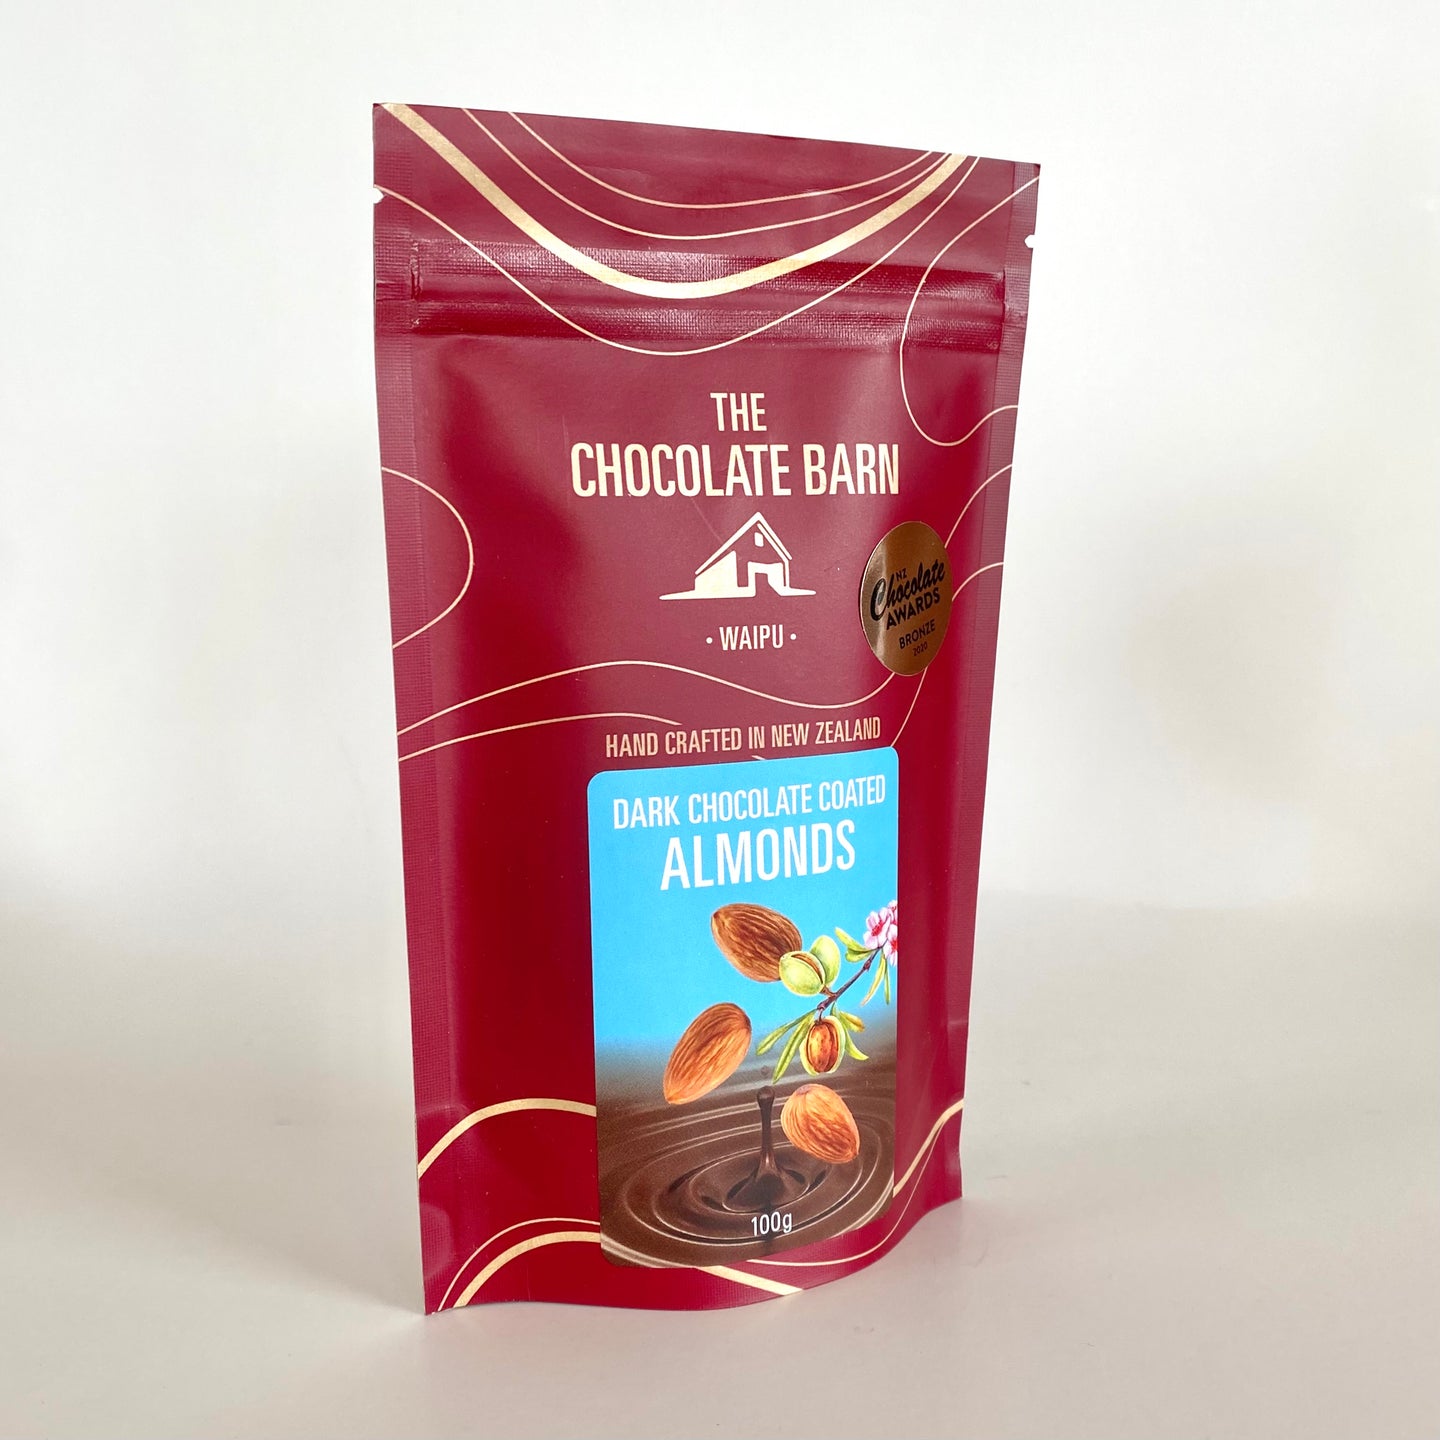 The Chocolate Barn - Dark Chocolate coated Almonds